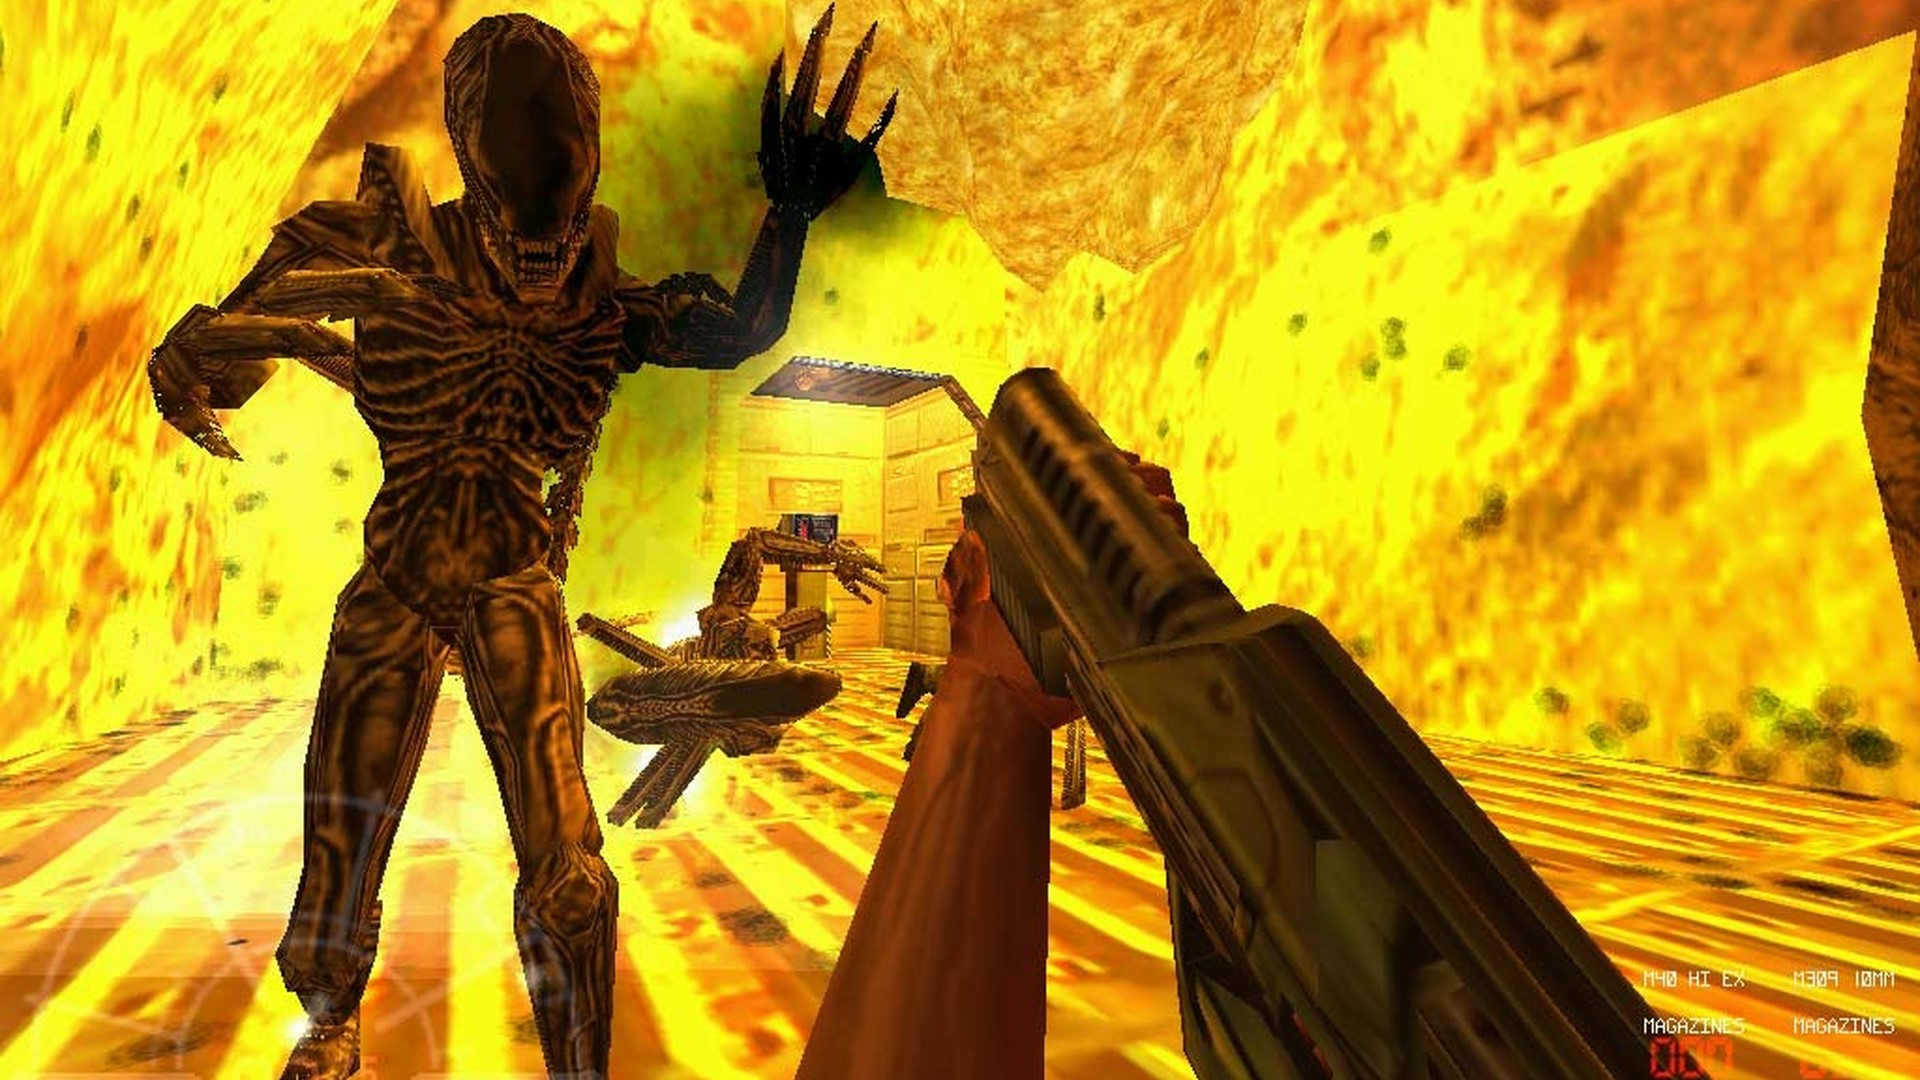 Claim FREE Aliens versus Predator Classic 2000 Steam key (updated)